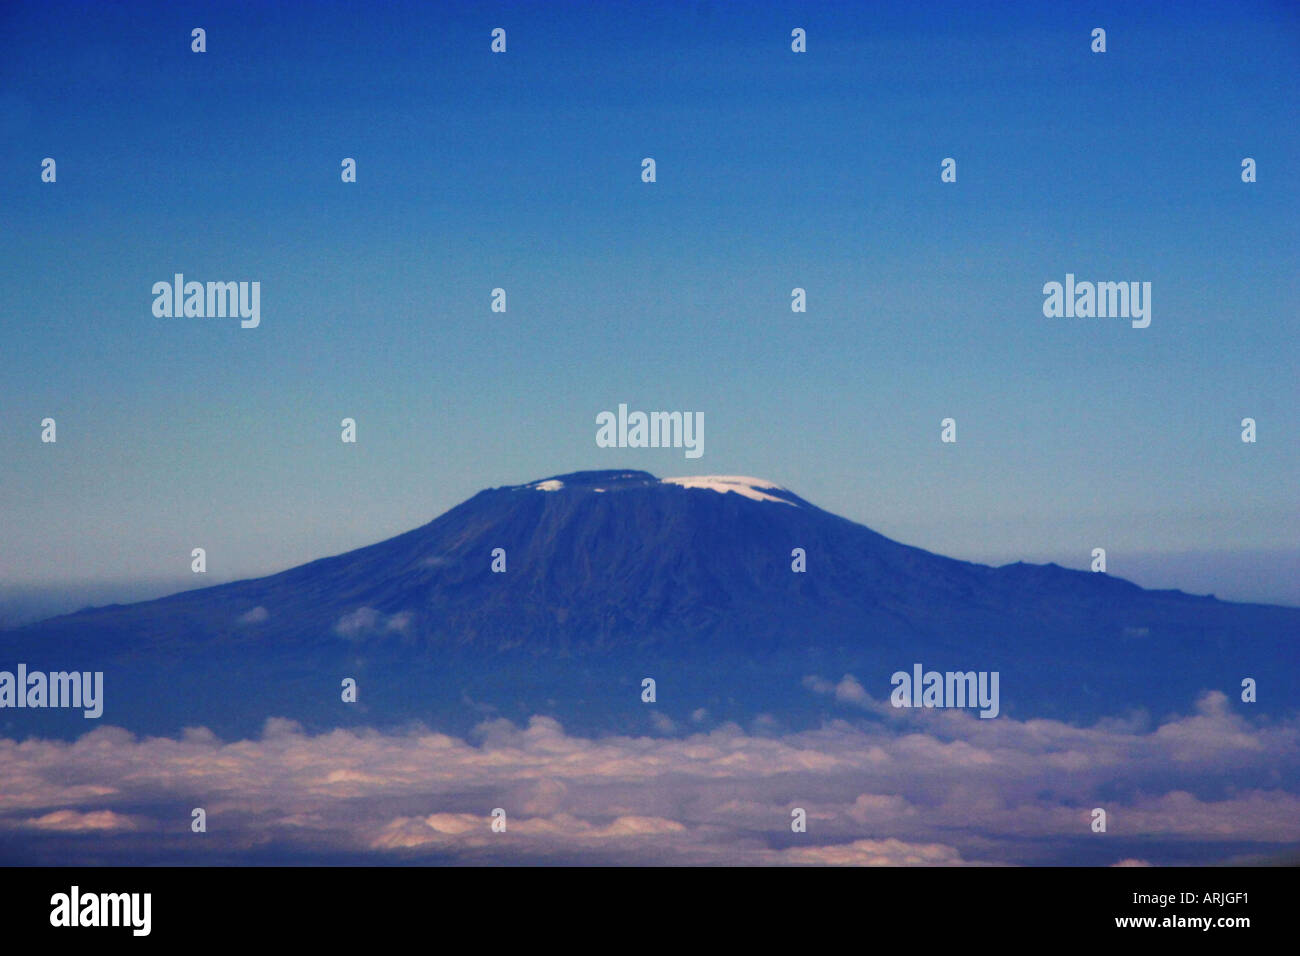 Mount Kilimanjaro 5895m, seen from an aeroplane. Stock Photo